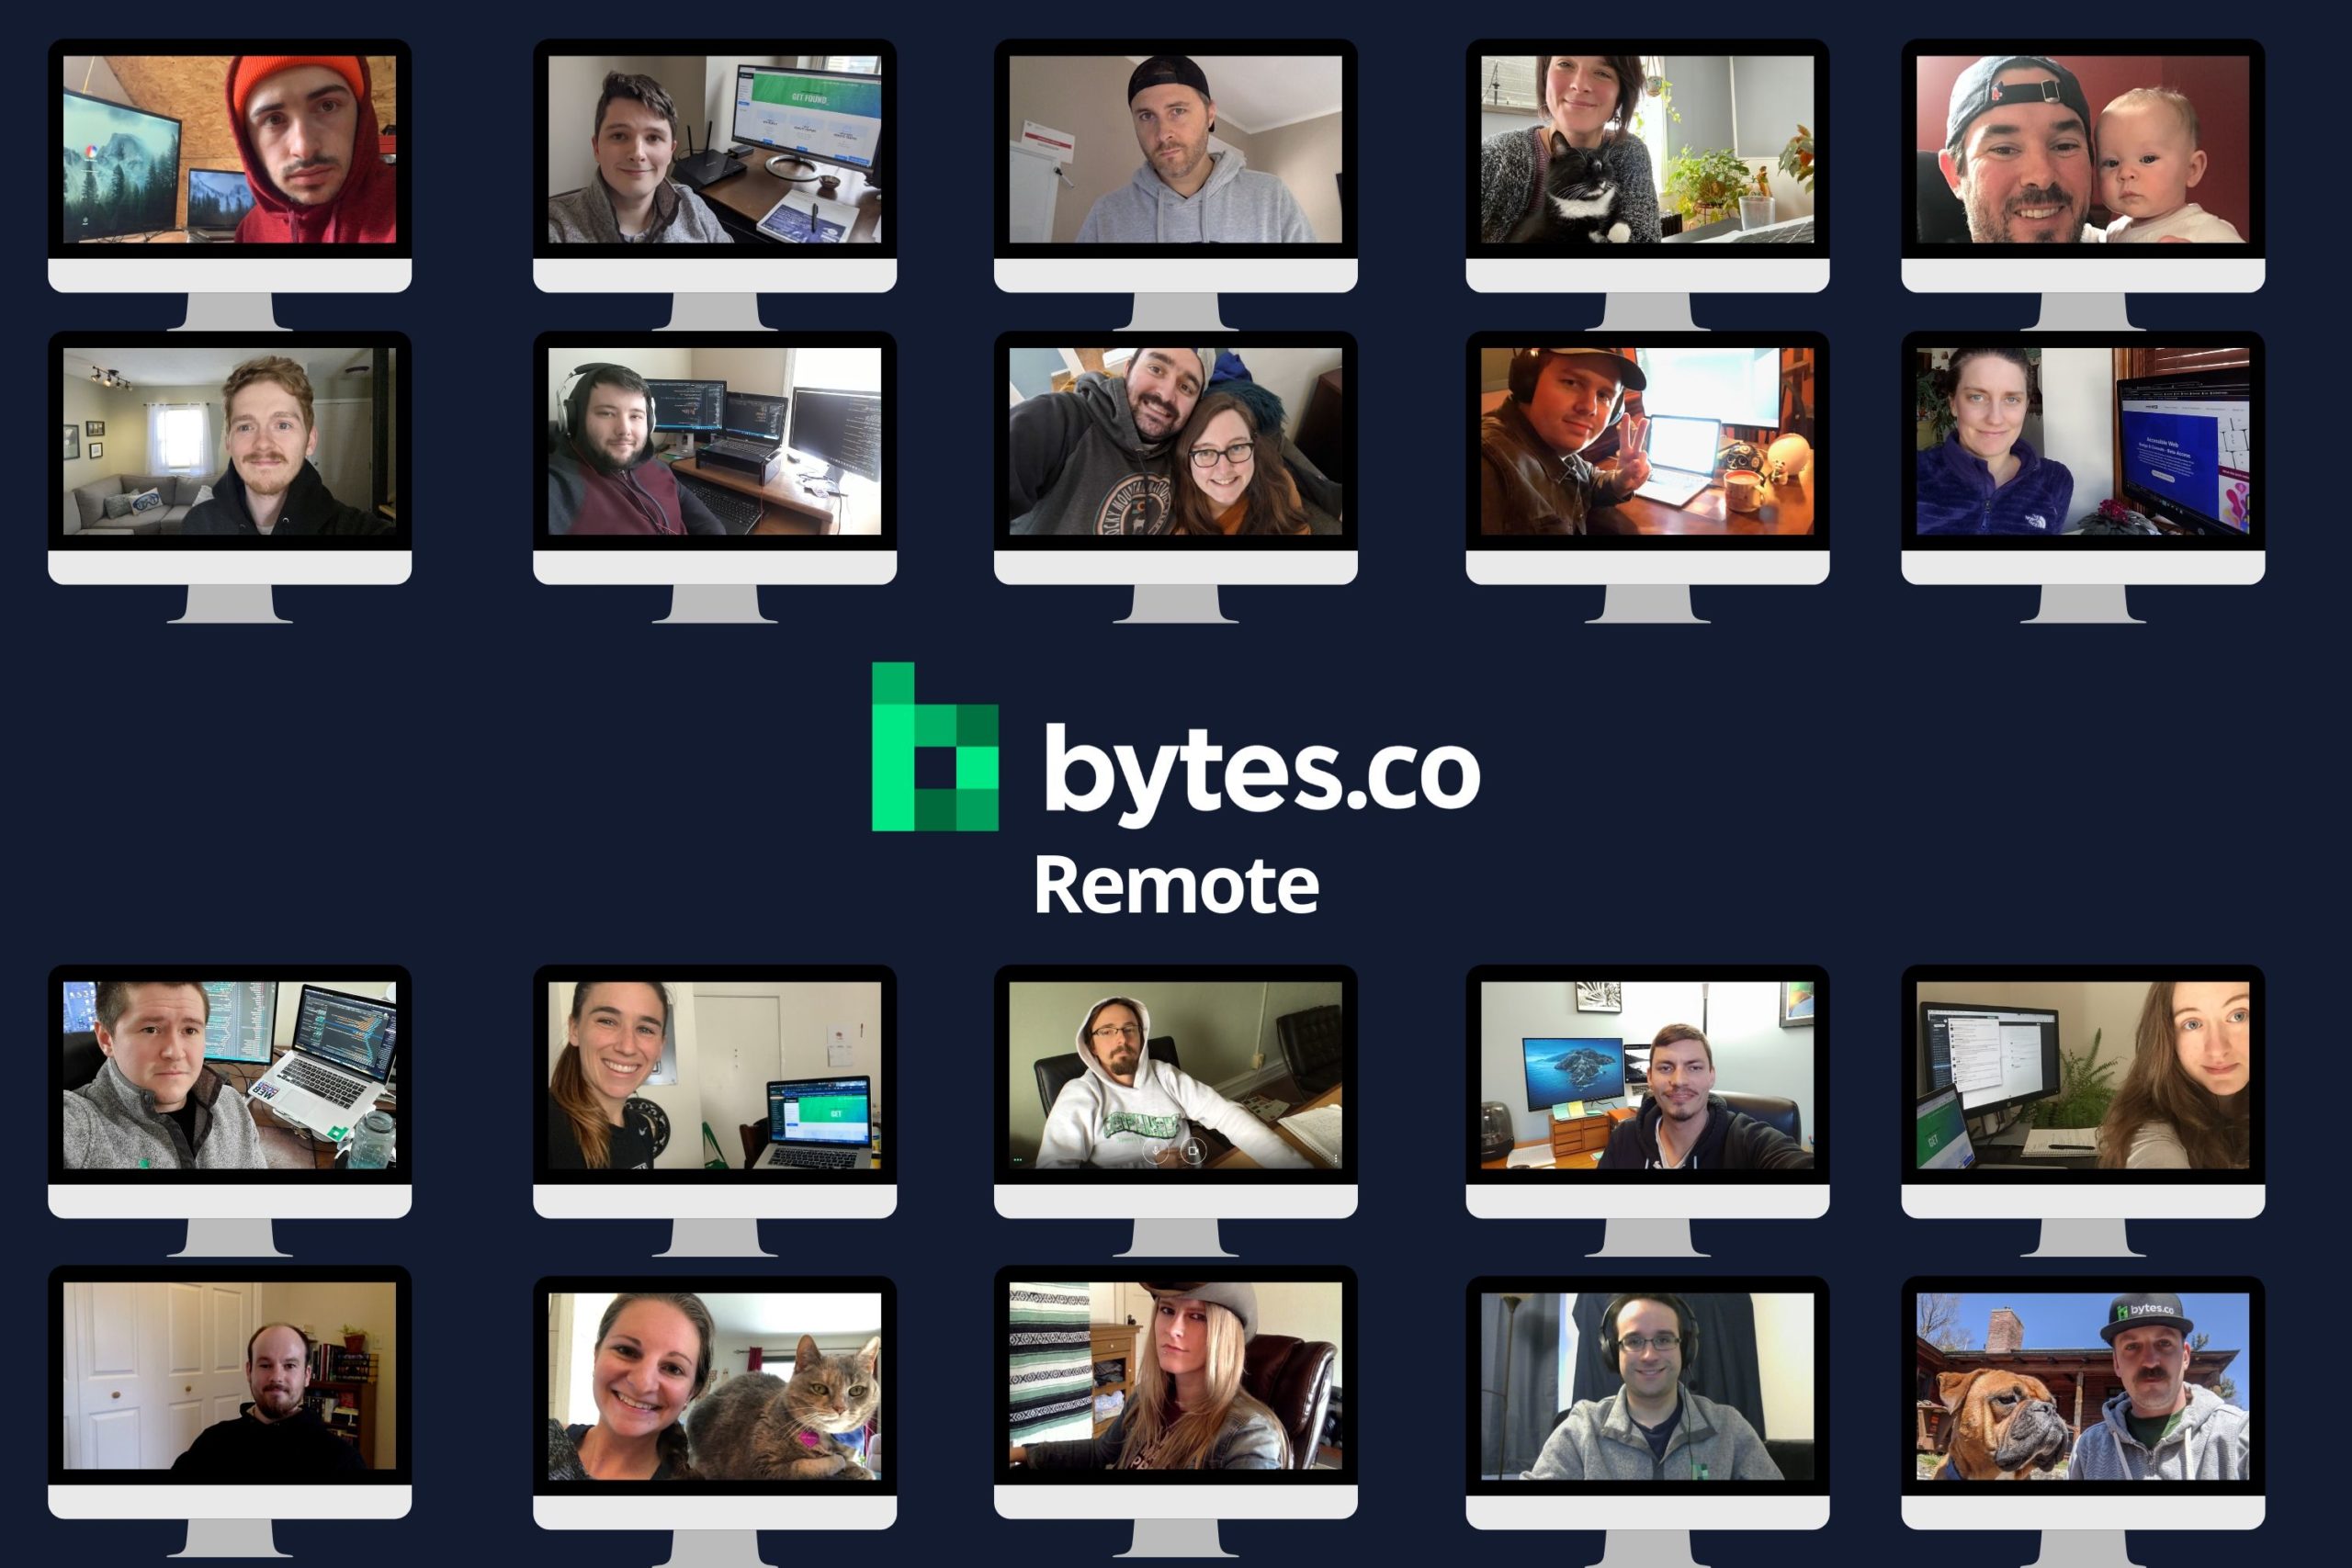 bytes.co team remote photos